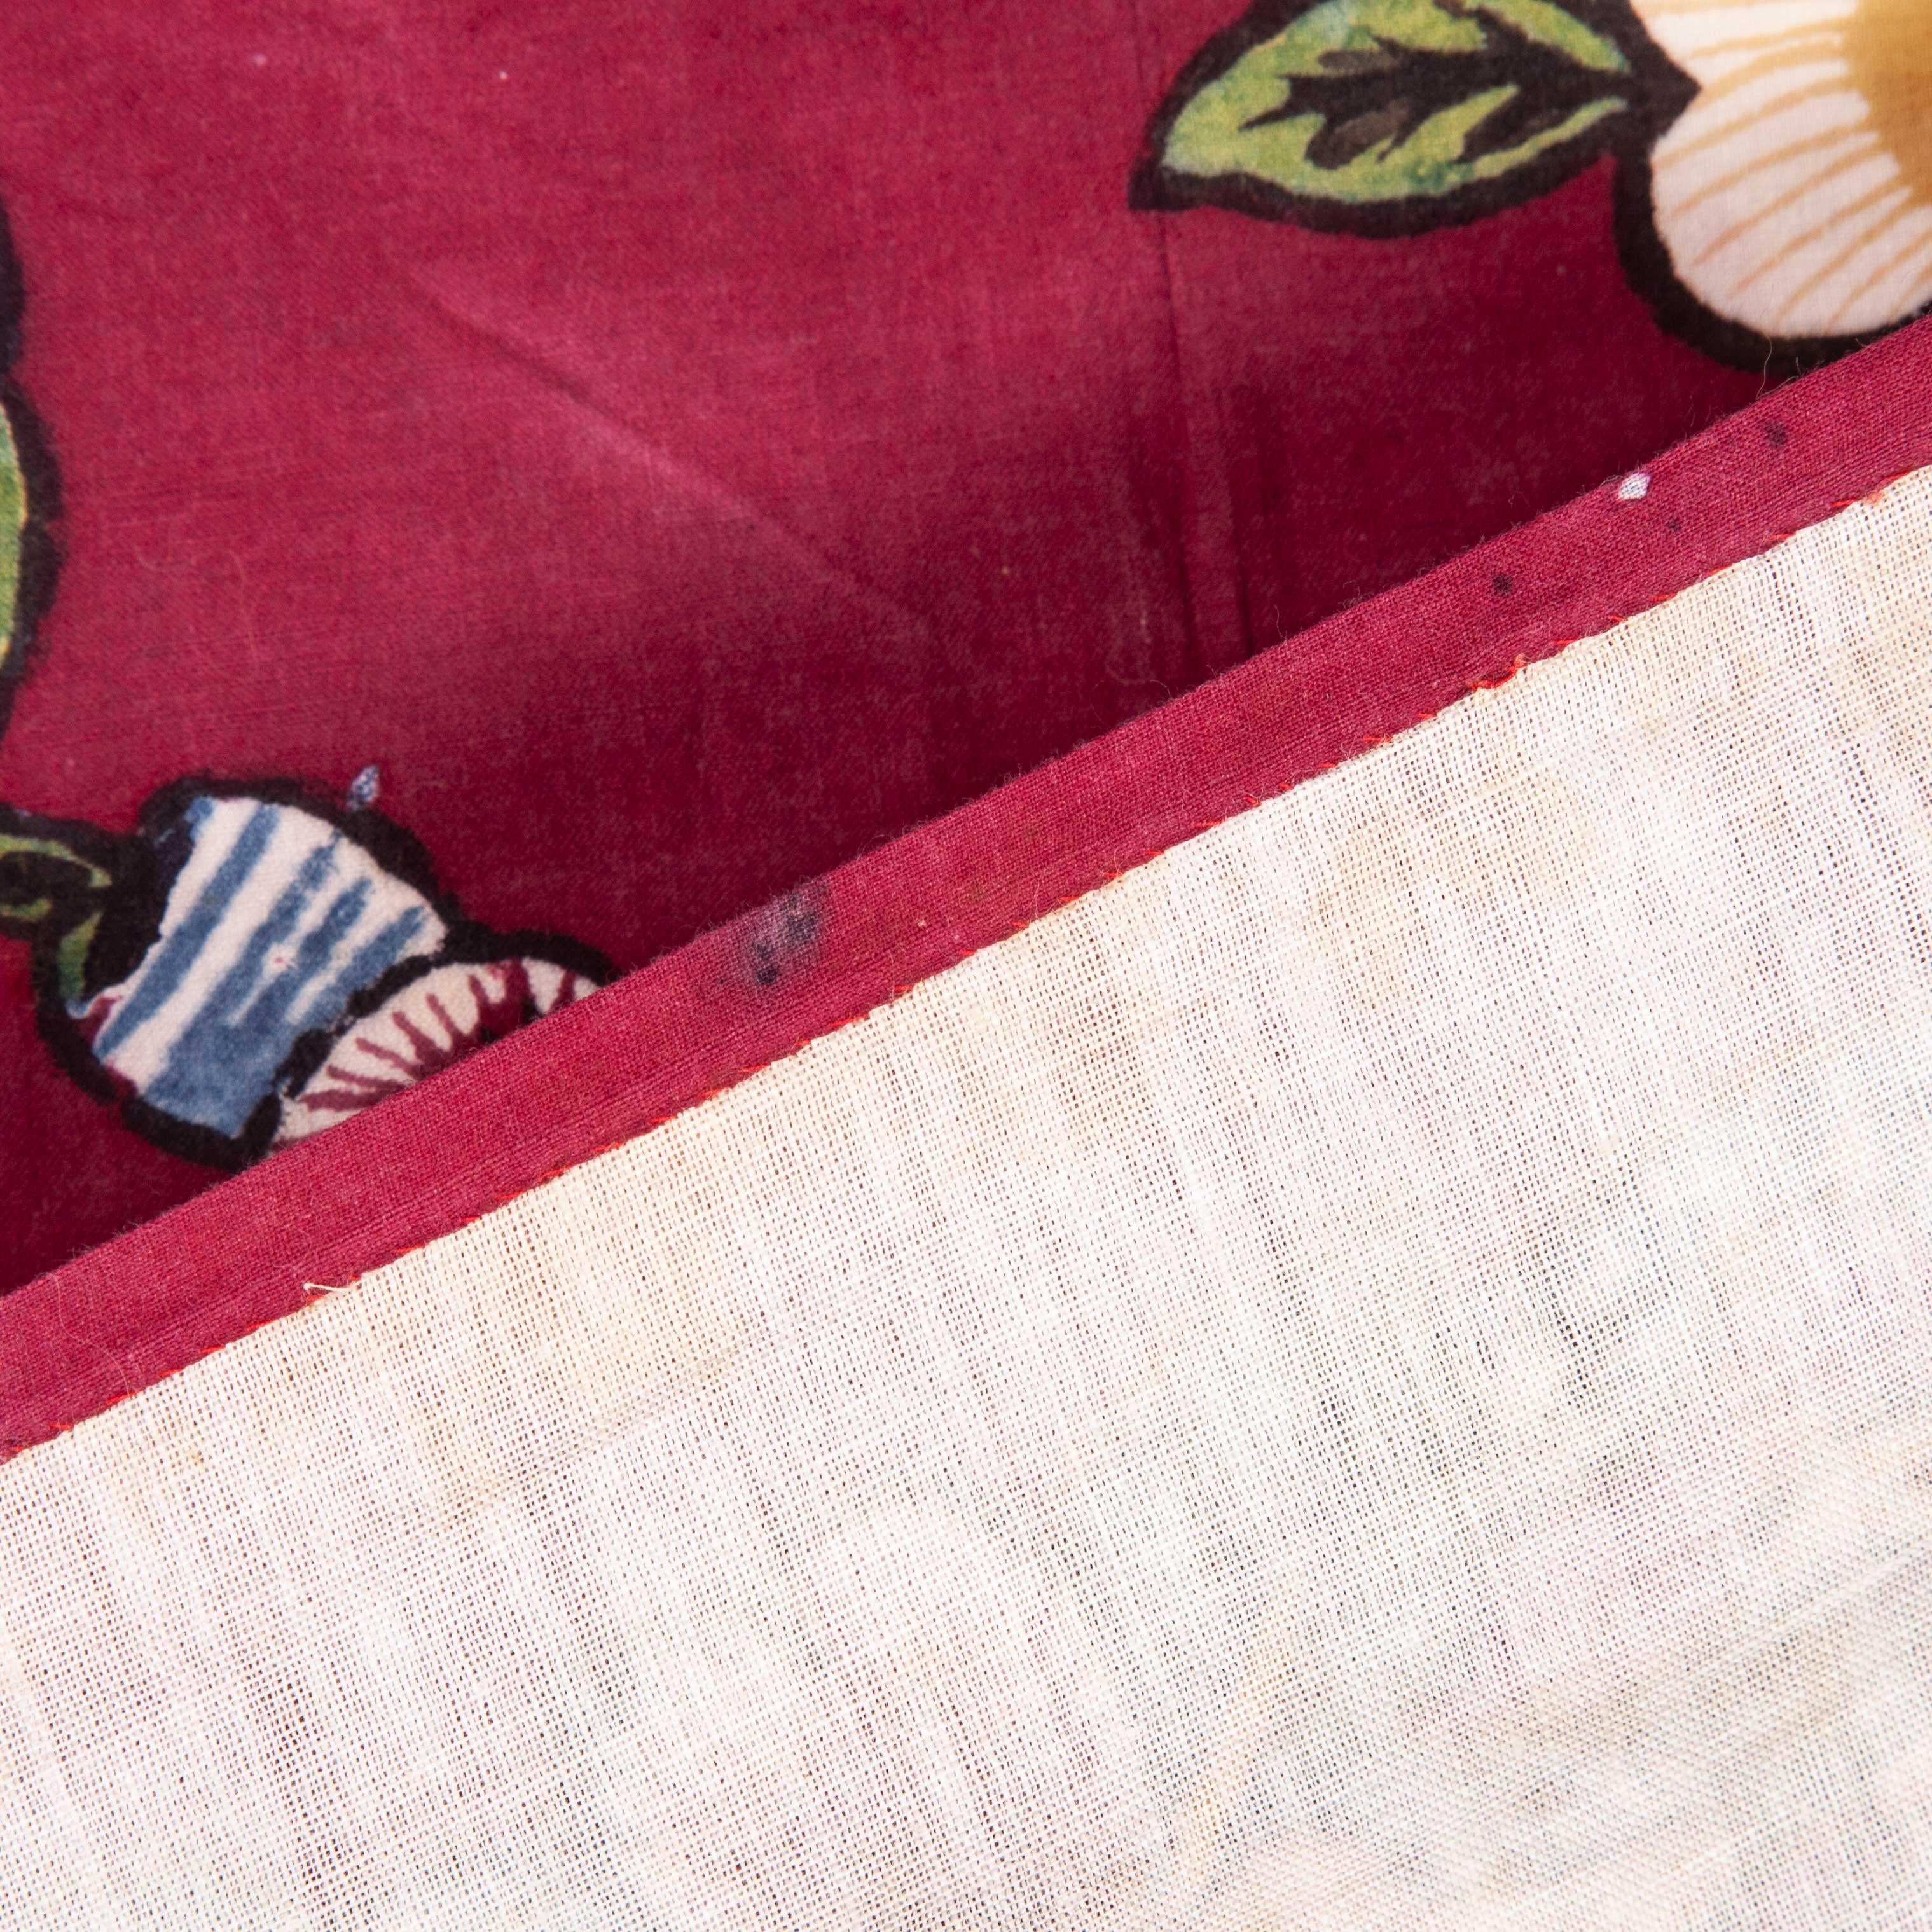 Cotton Anatolian Turkish Folk Art Block Printed and Painted Bokhce 'Wrapping Cloth'